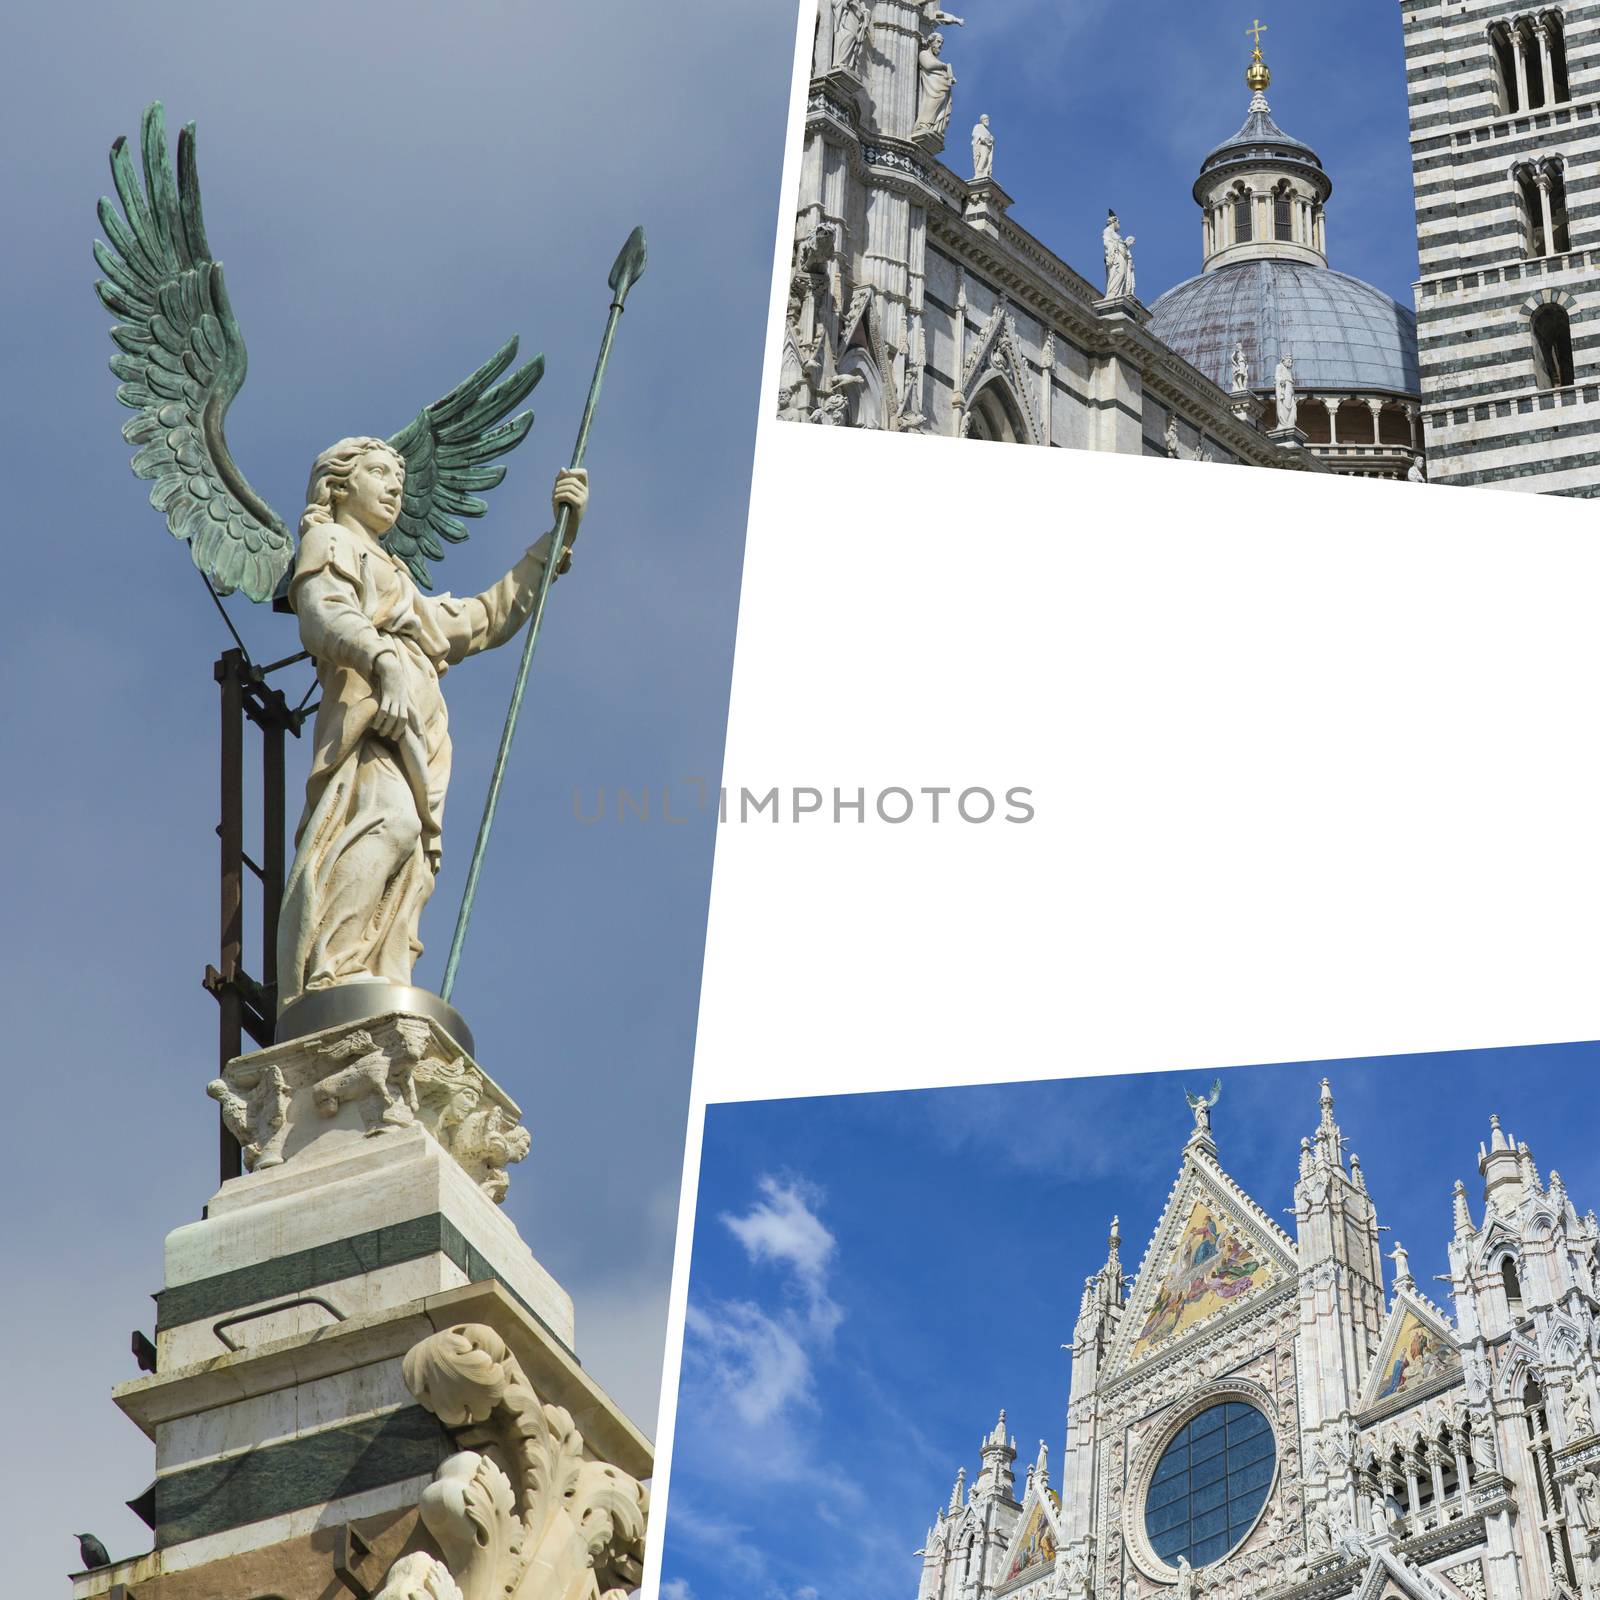 Touristic destination in Tuscany, Siena, photo collage